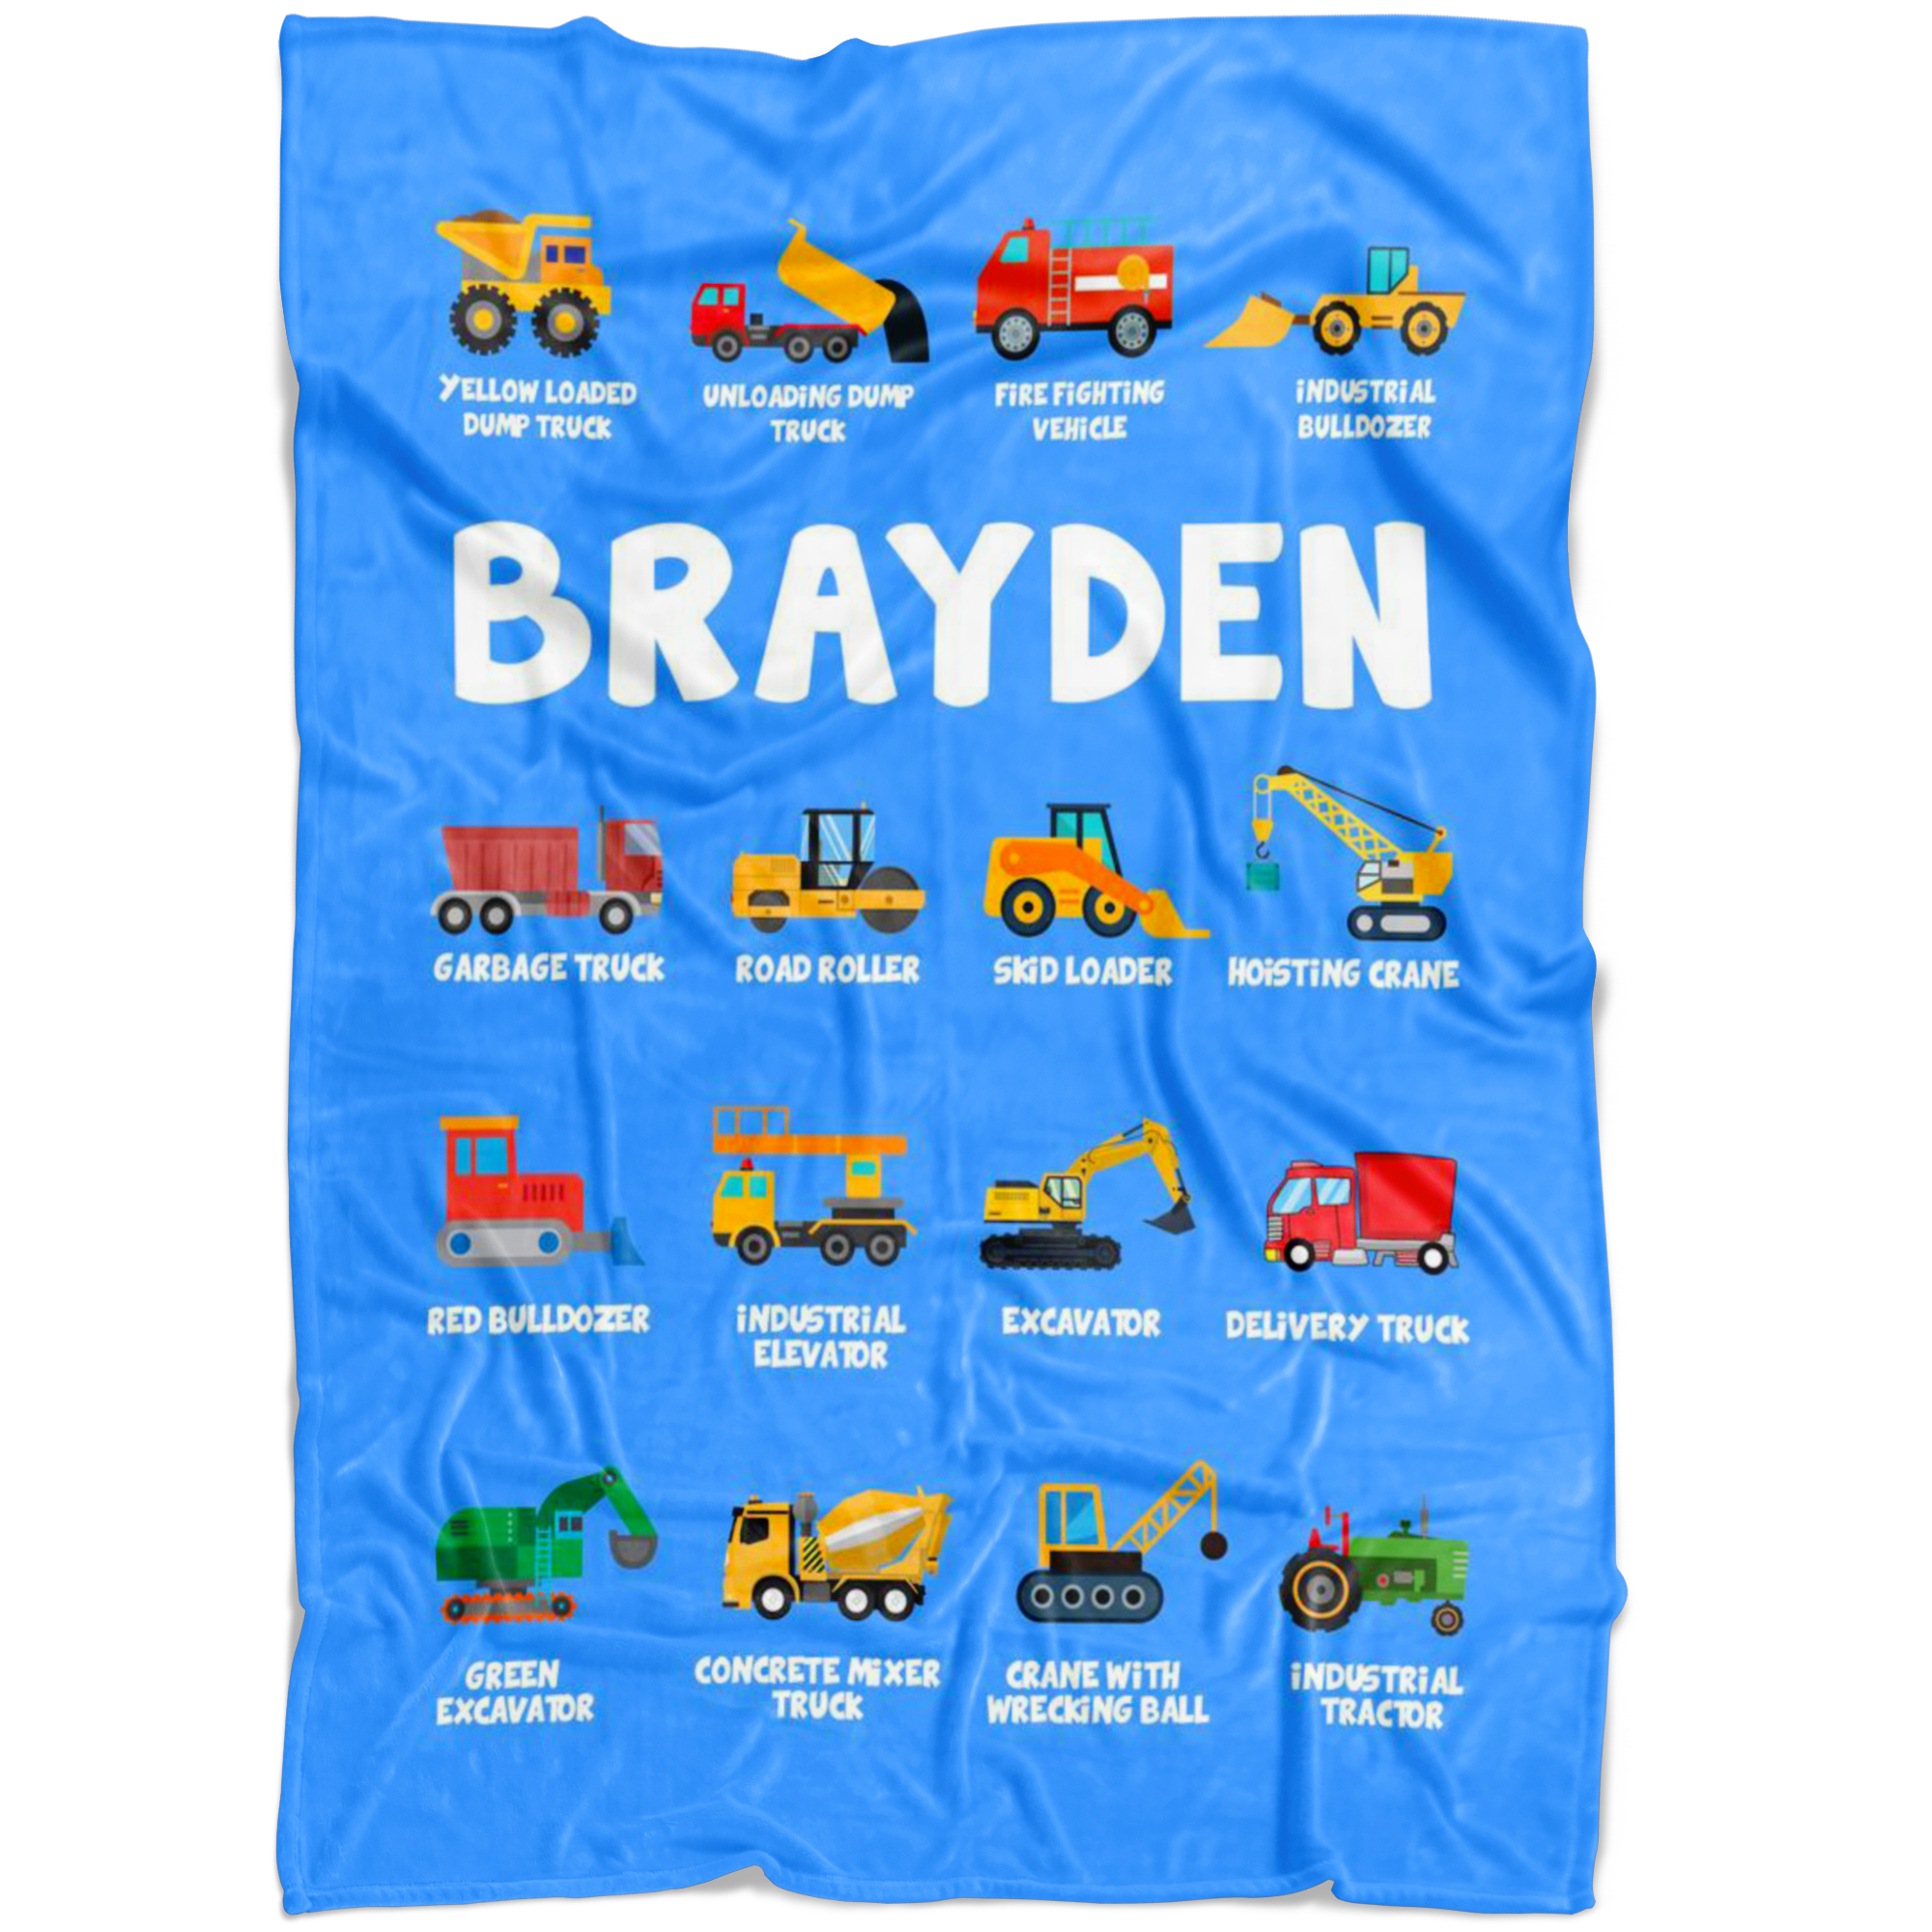 Brayden Construction Blanket Blue